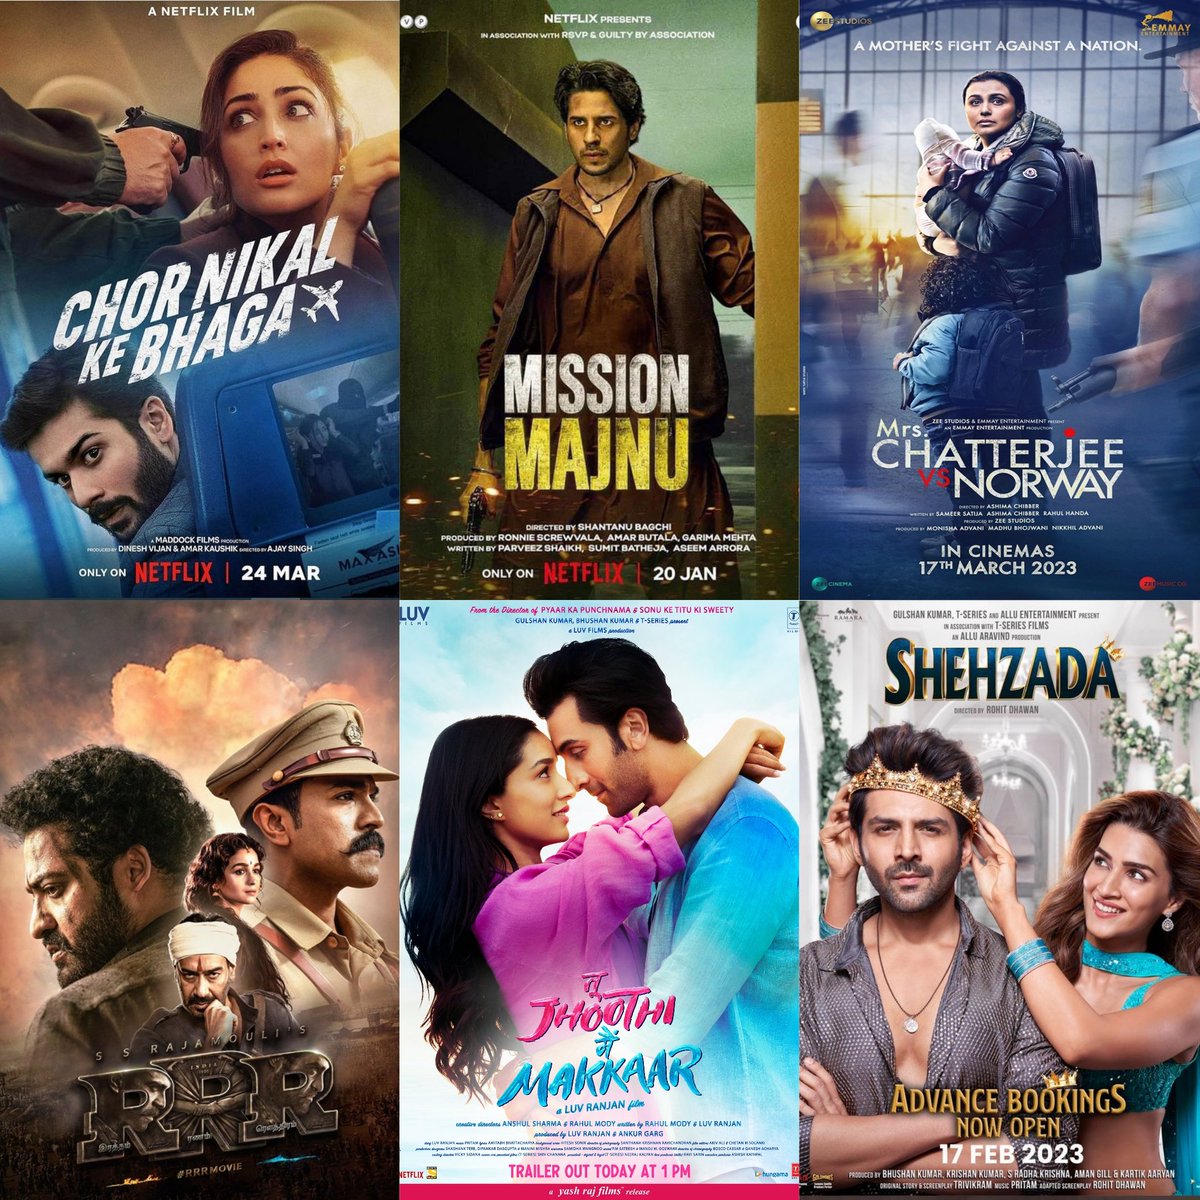 Most watched Indian movie on Netflix (January - June 2023) ✅
⭐#ChorNikalKeBhaga 41.7 M 
⭐ #MissionMajnu 31.2 M
⭐ #MrsChatterjeevsNorway 29.6  M
⭐#RRRMovie 29.4 M
⭐#TJMM 27.1 M 
⭐ #Shehzada 24.8 M

#SunnyKaushal #SidharthMalhotra
#NTR #RamCharan #KartikAaryan
#RanbirKapoor